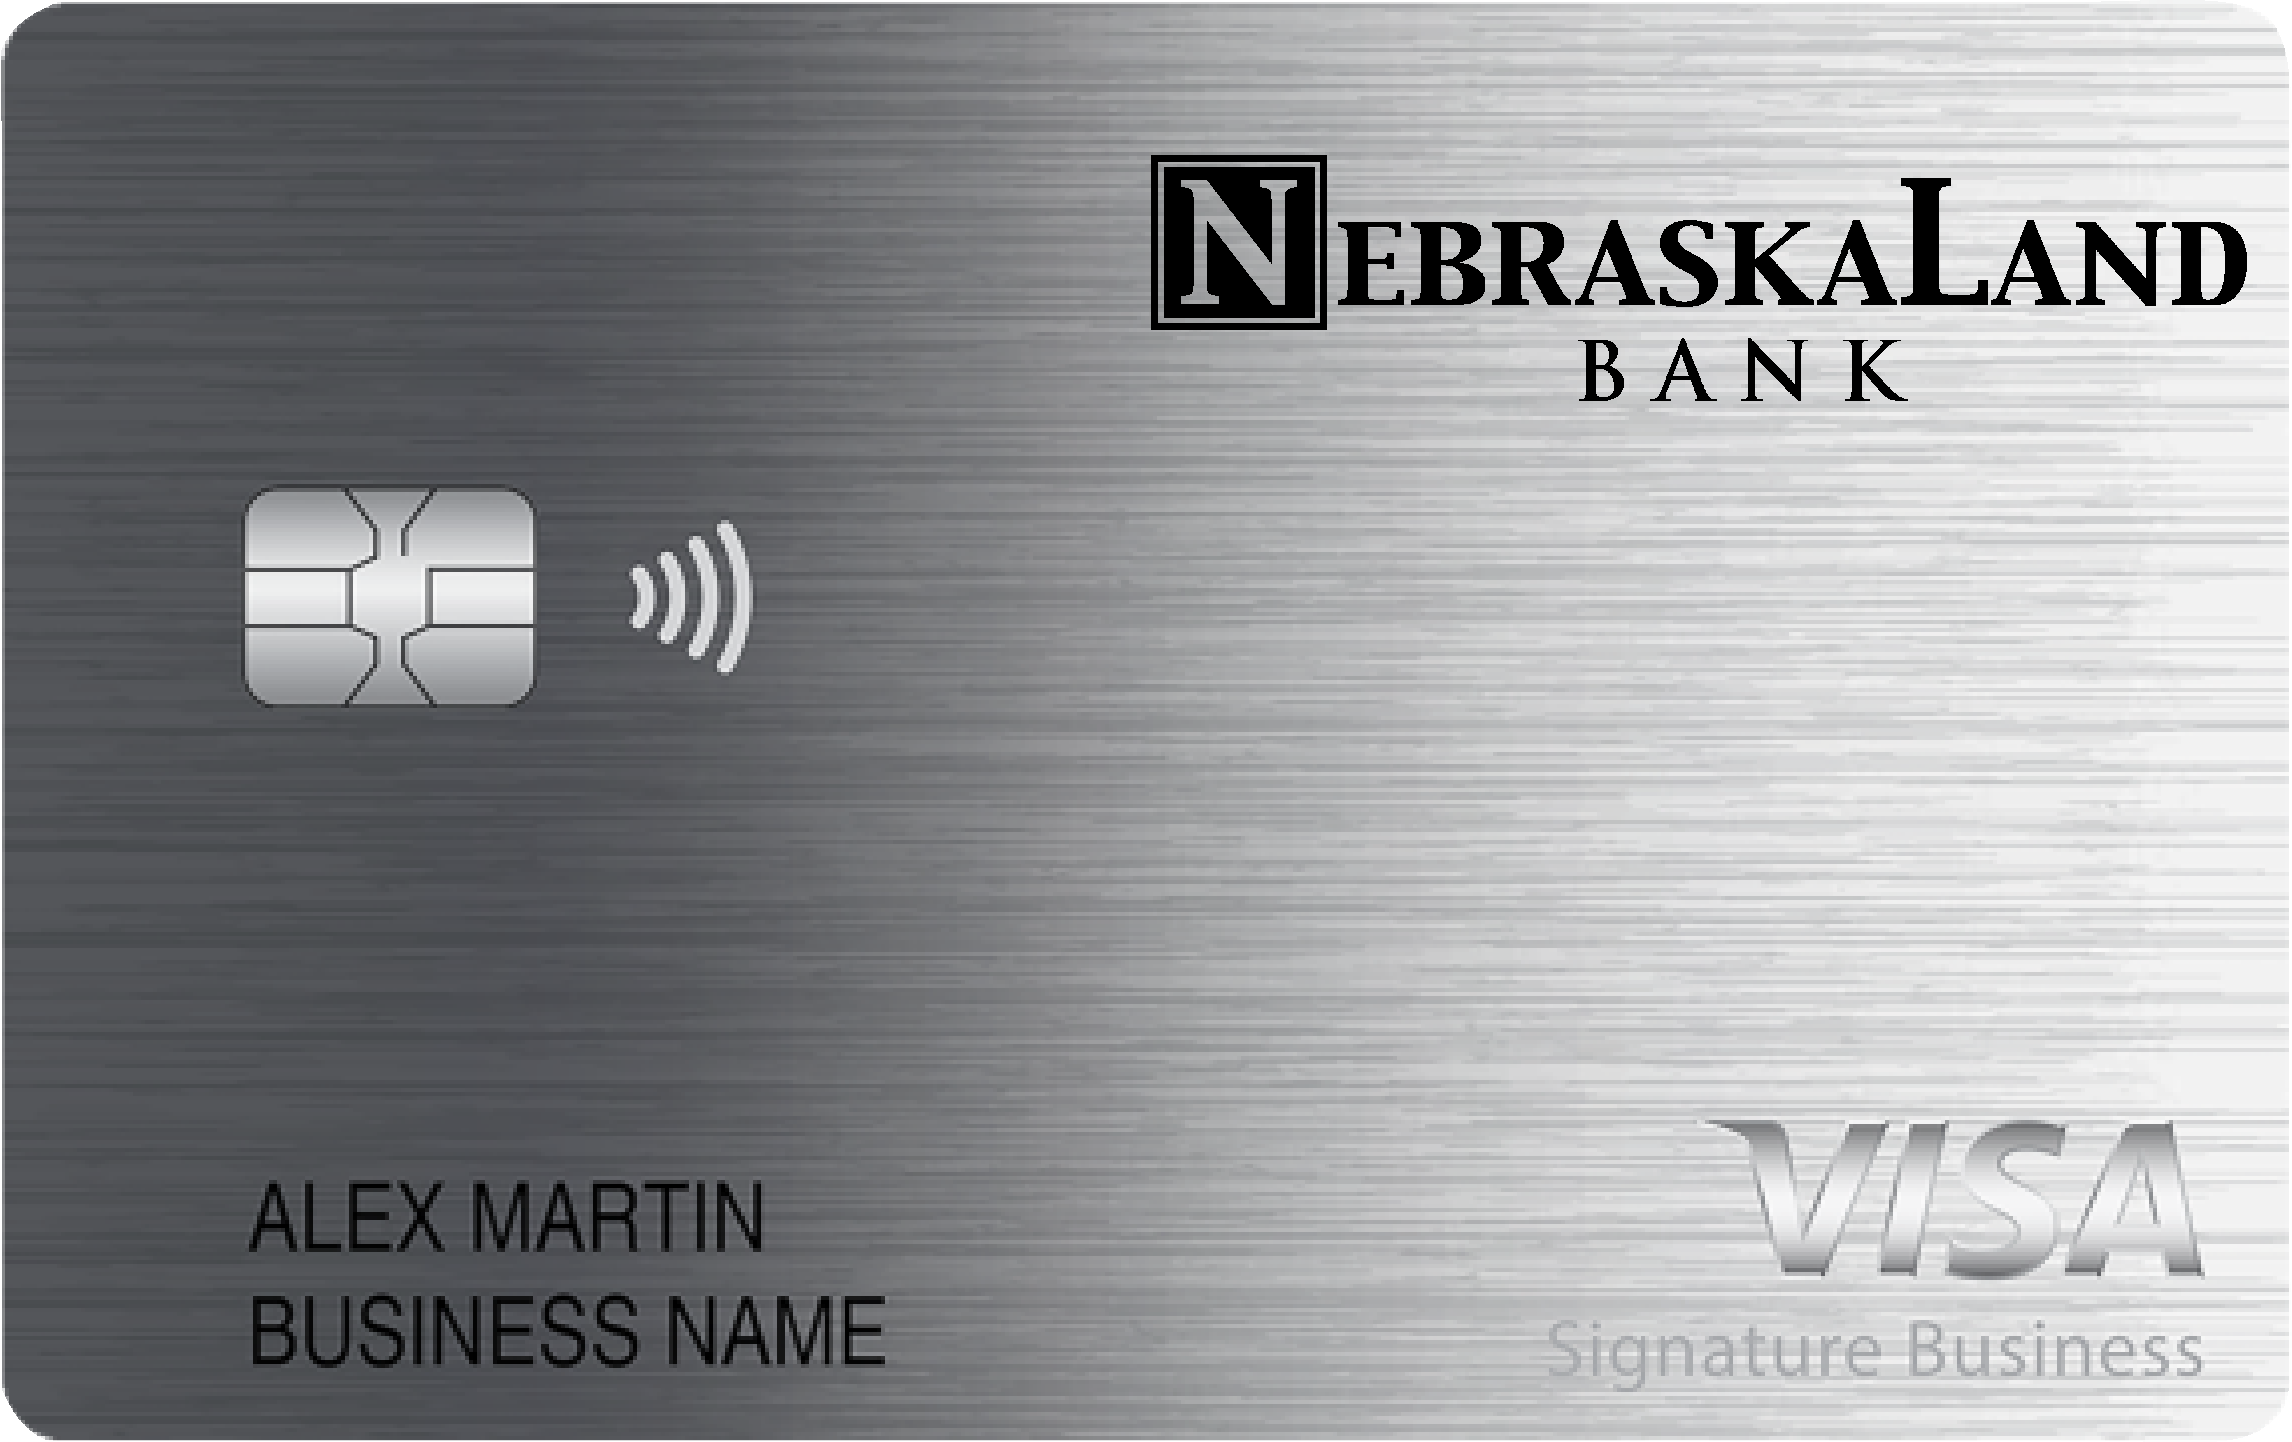 Nebraskaland Bank Smart Business Rewards Card